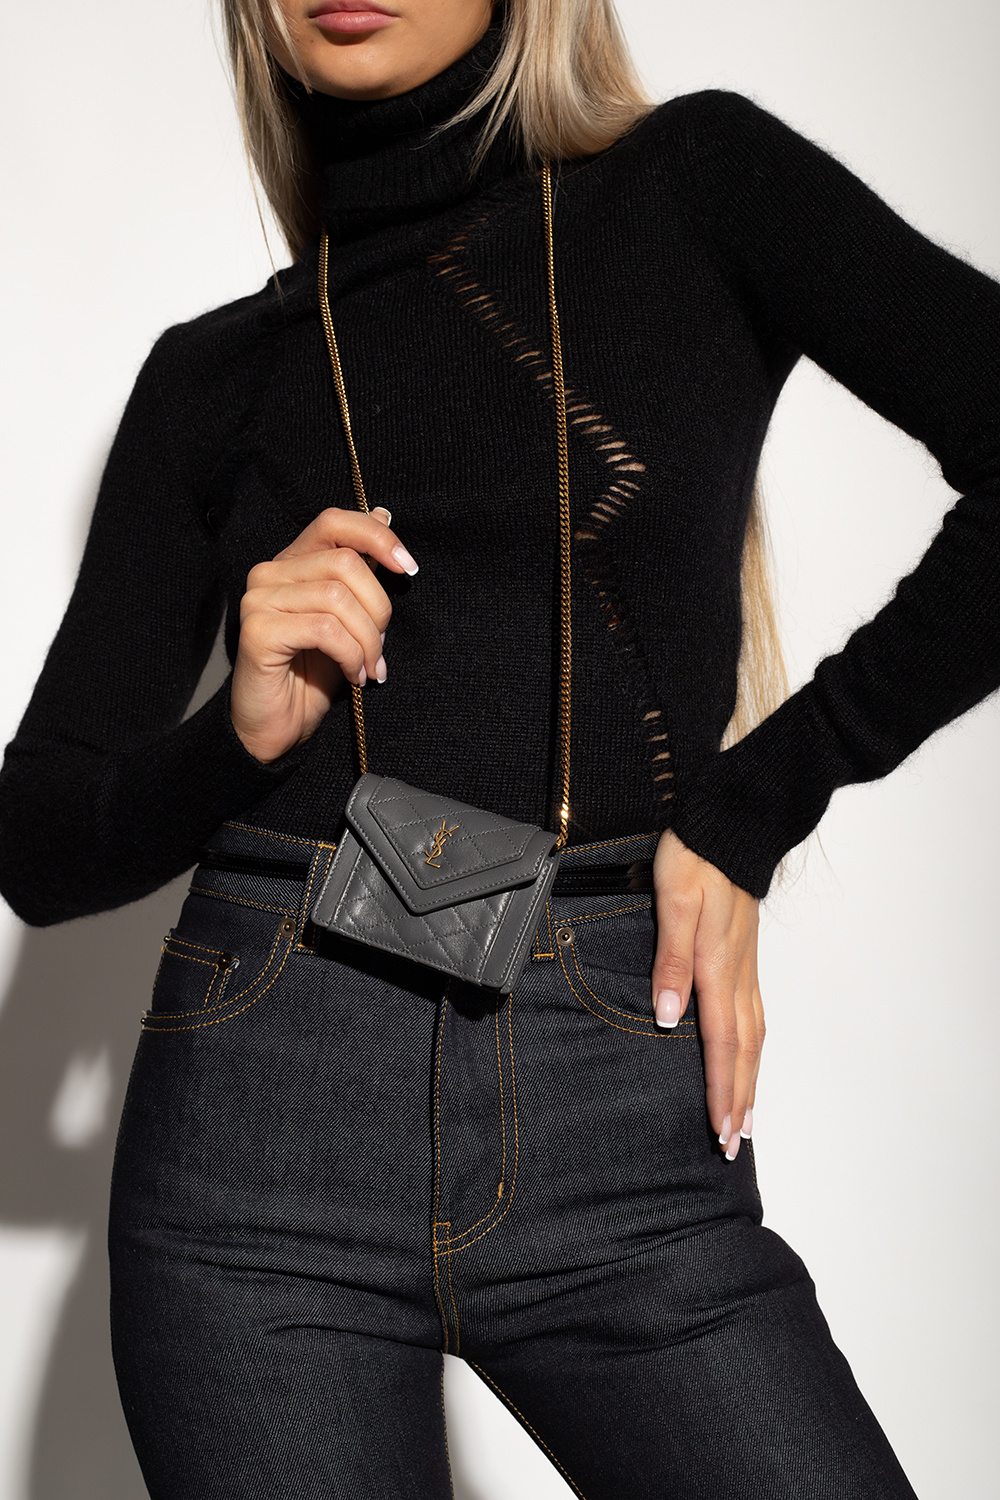 Saint Laurent Mini Gaby Quilted Black Leather Shoulder Bag New